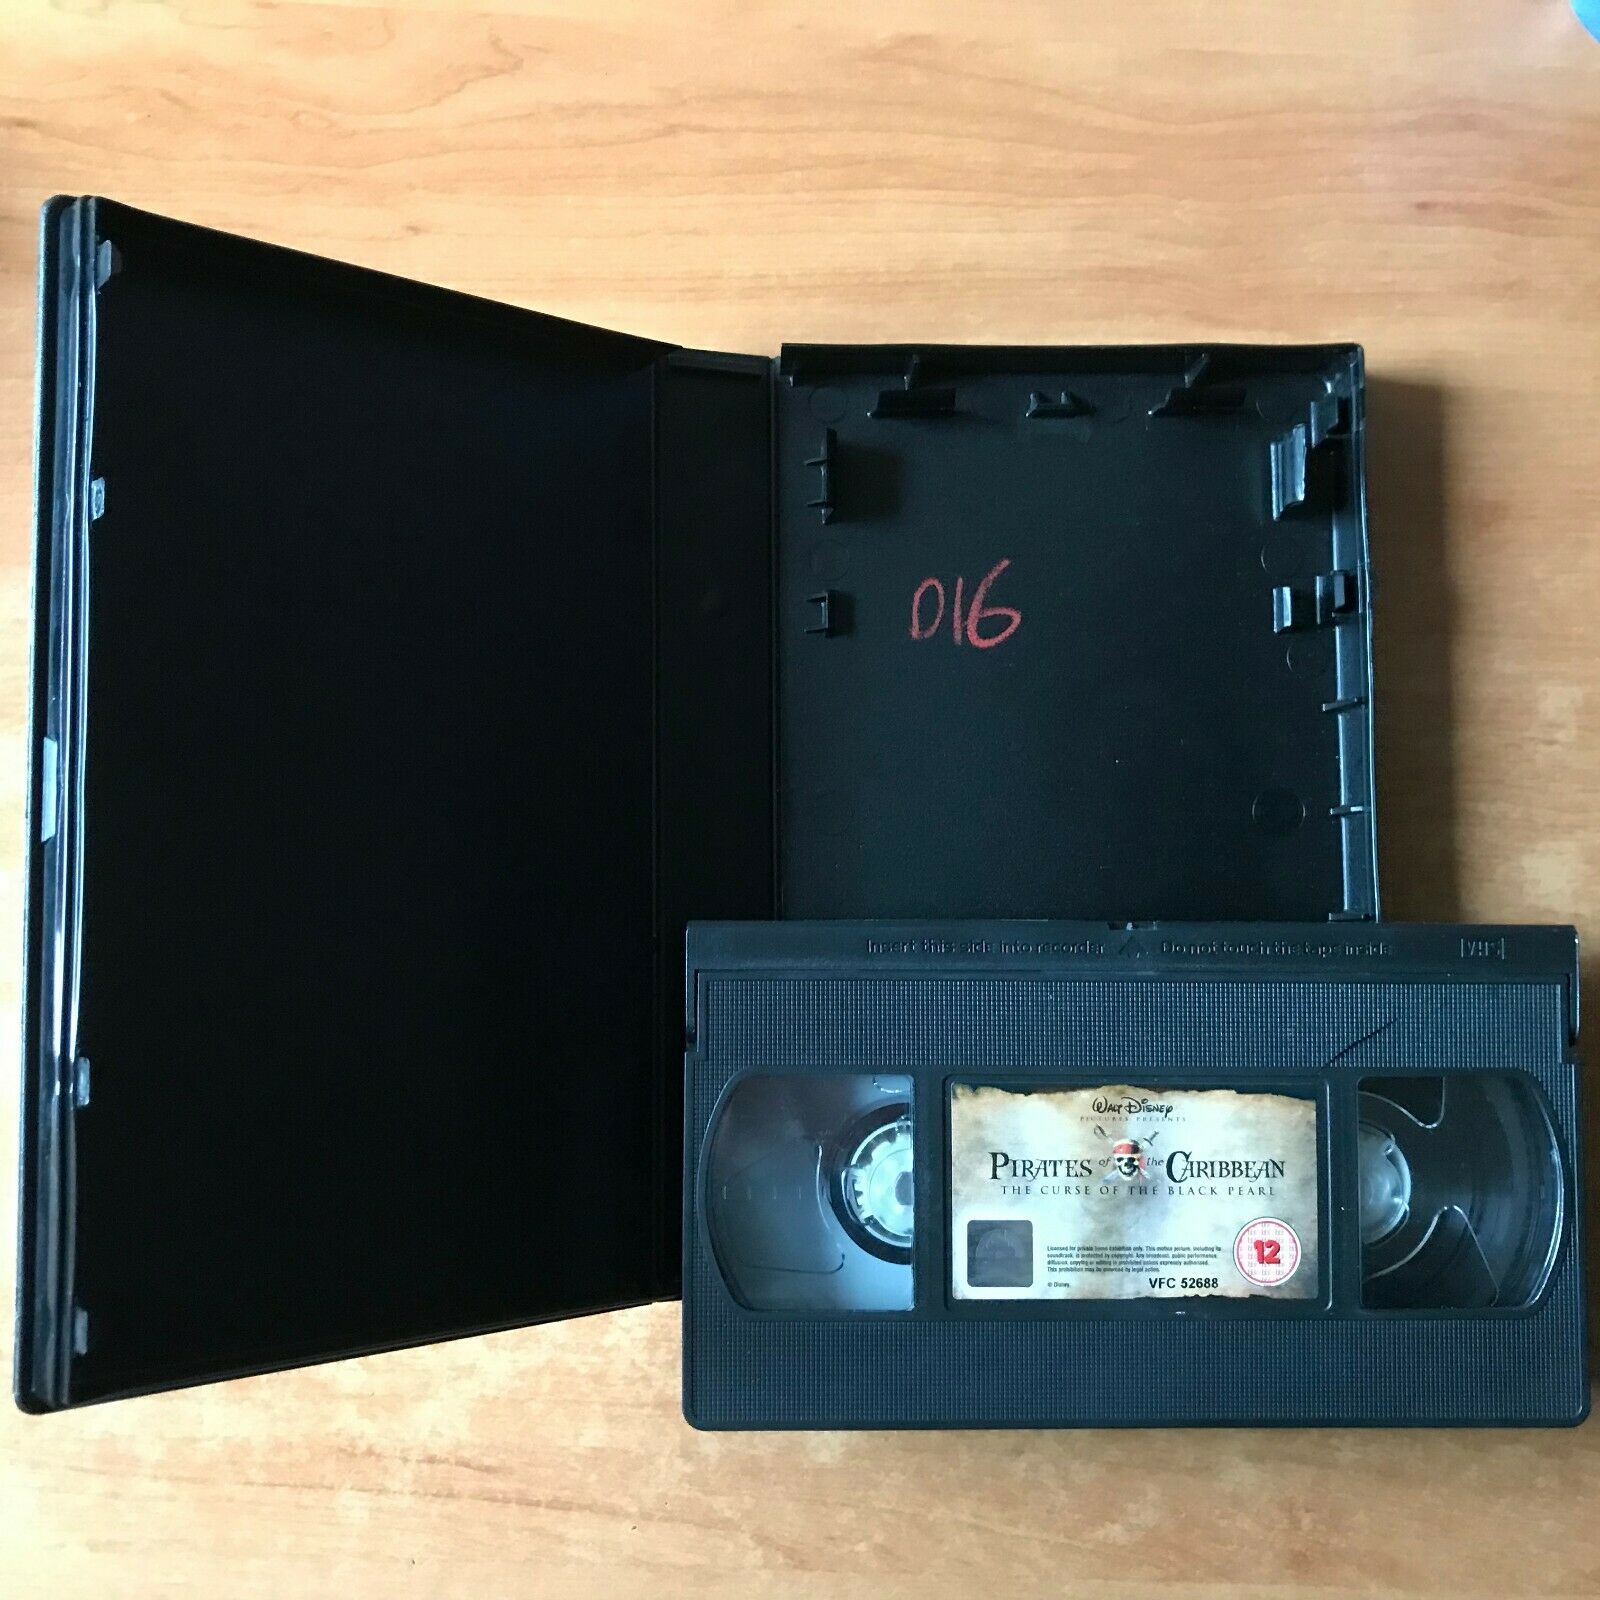 Pirates Of Caribbean [Black Pearl] Fantasy Adventure [Large Box] Rental - VHS-